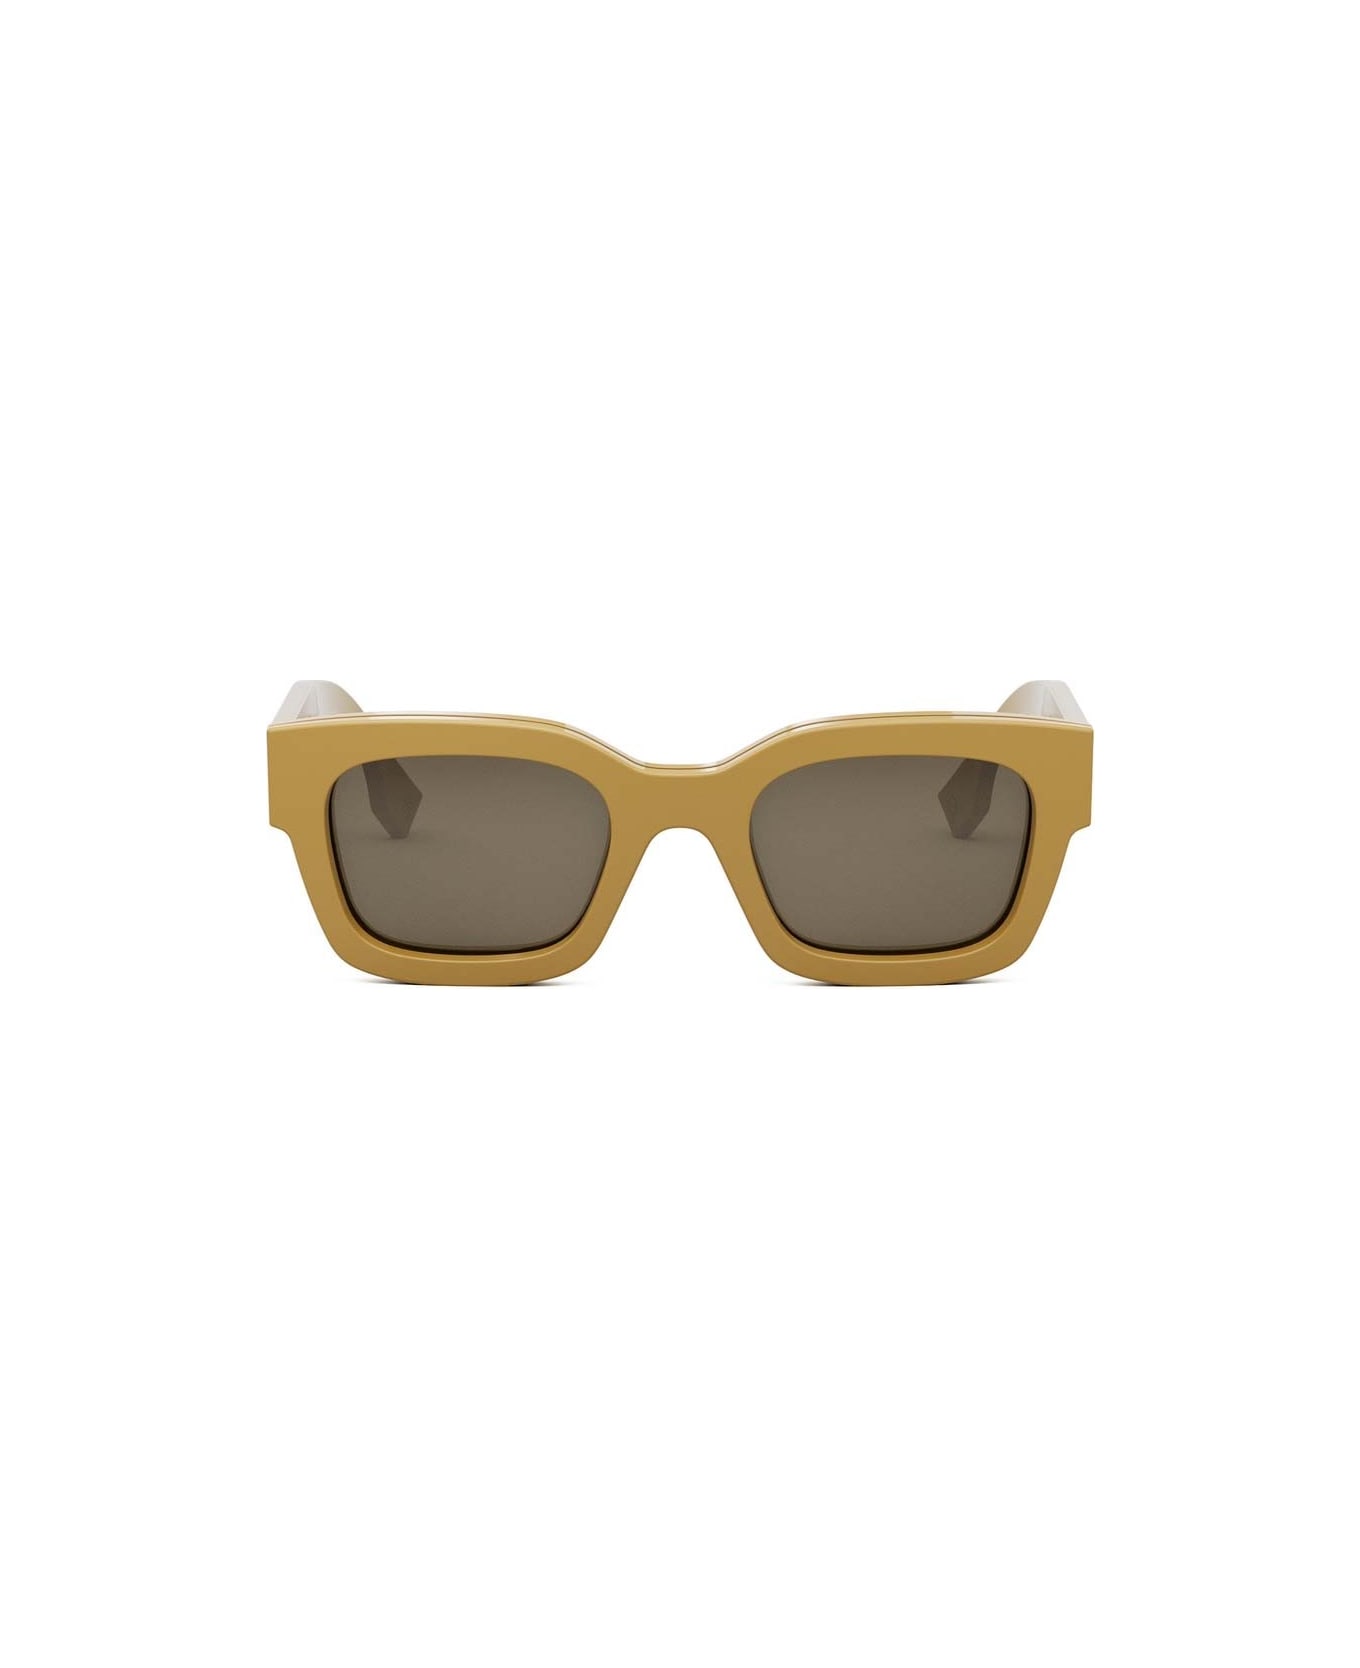 Fendi Eyewear Sunglasses - Giallo/Grigio